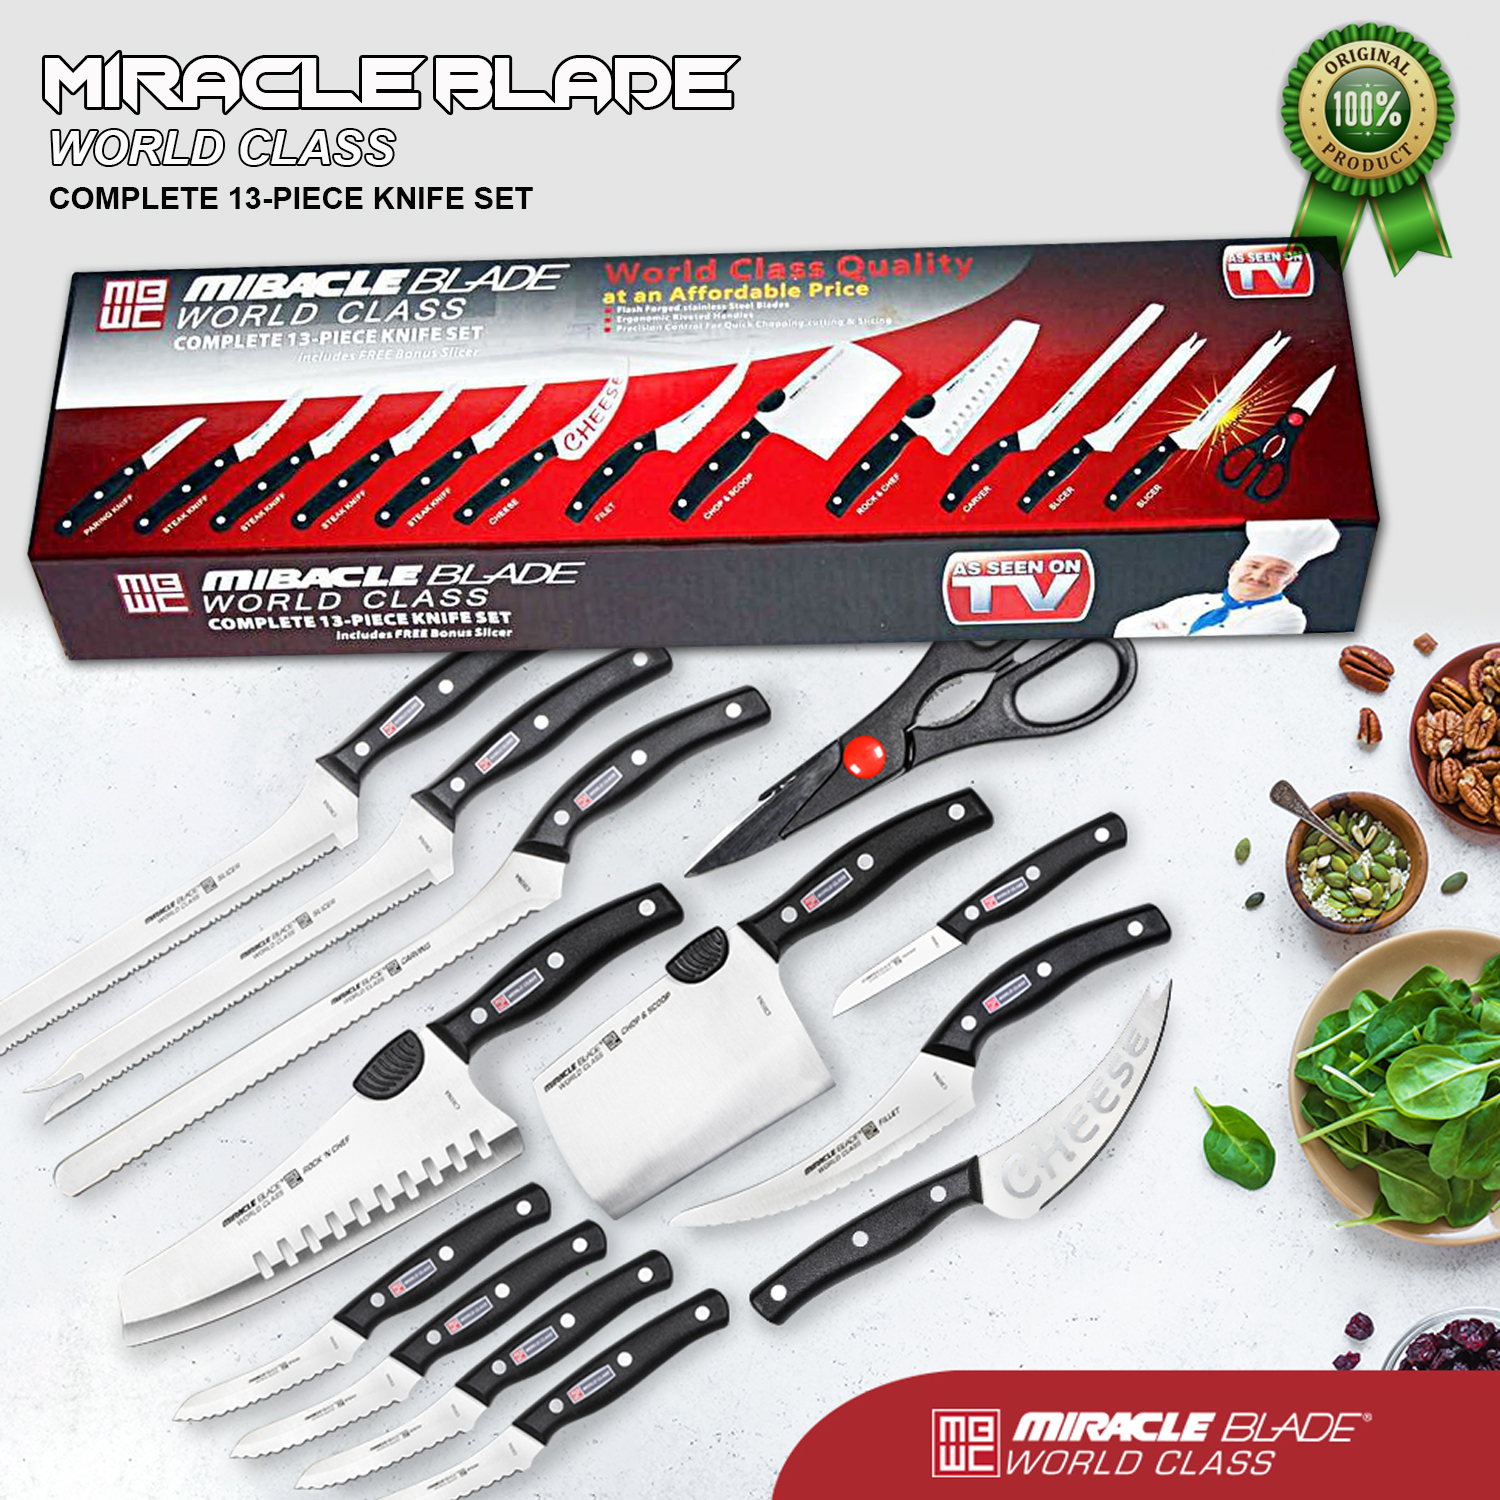 13 Piece Miracle Blade World Class Knife Set, Cheese Knife, Steak